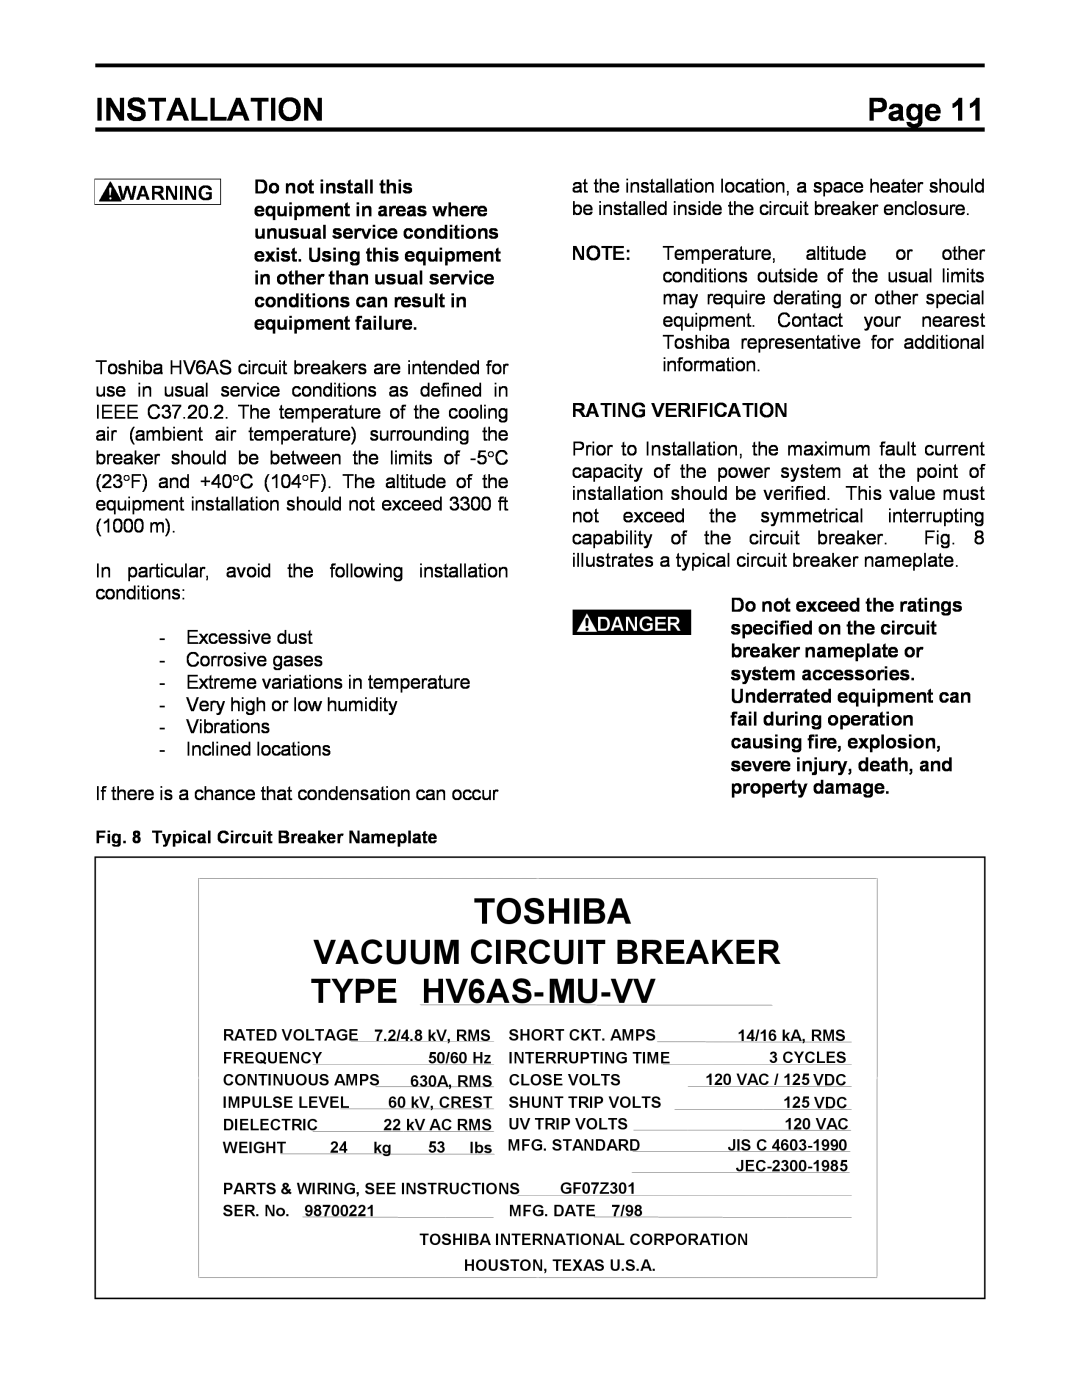 Toshiba Installation, Rating Verification, Toshiba, VACUUM CIRCUIT BREAKER TYPE HV6AS-MU-VV, Page, Danger 